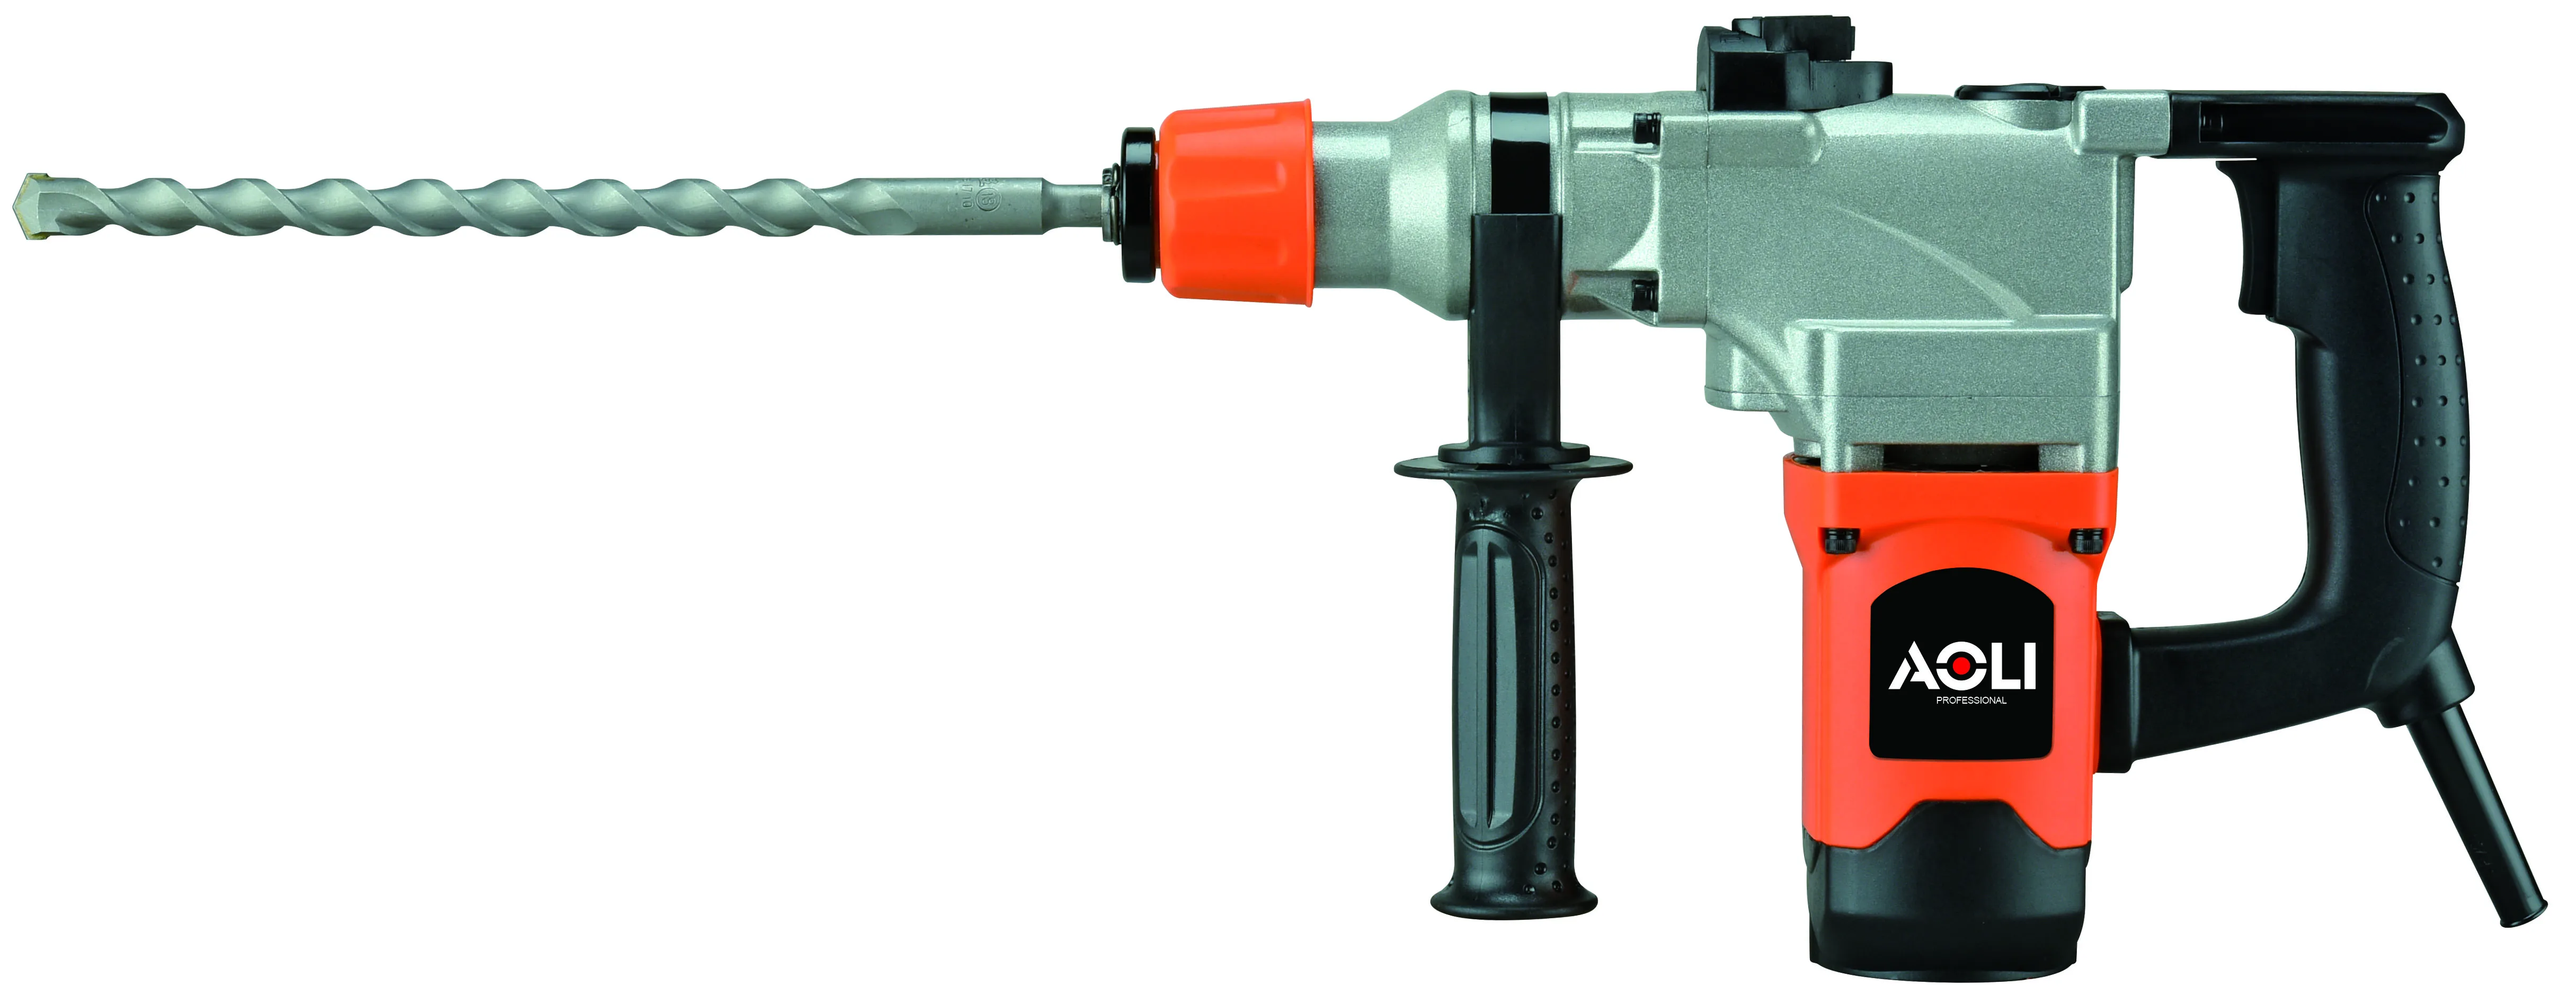 AL-6626 hand rock drilling tools 850W 26mm rotary hammer tools drill Jack electric hammer